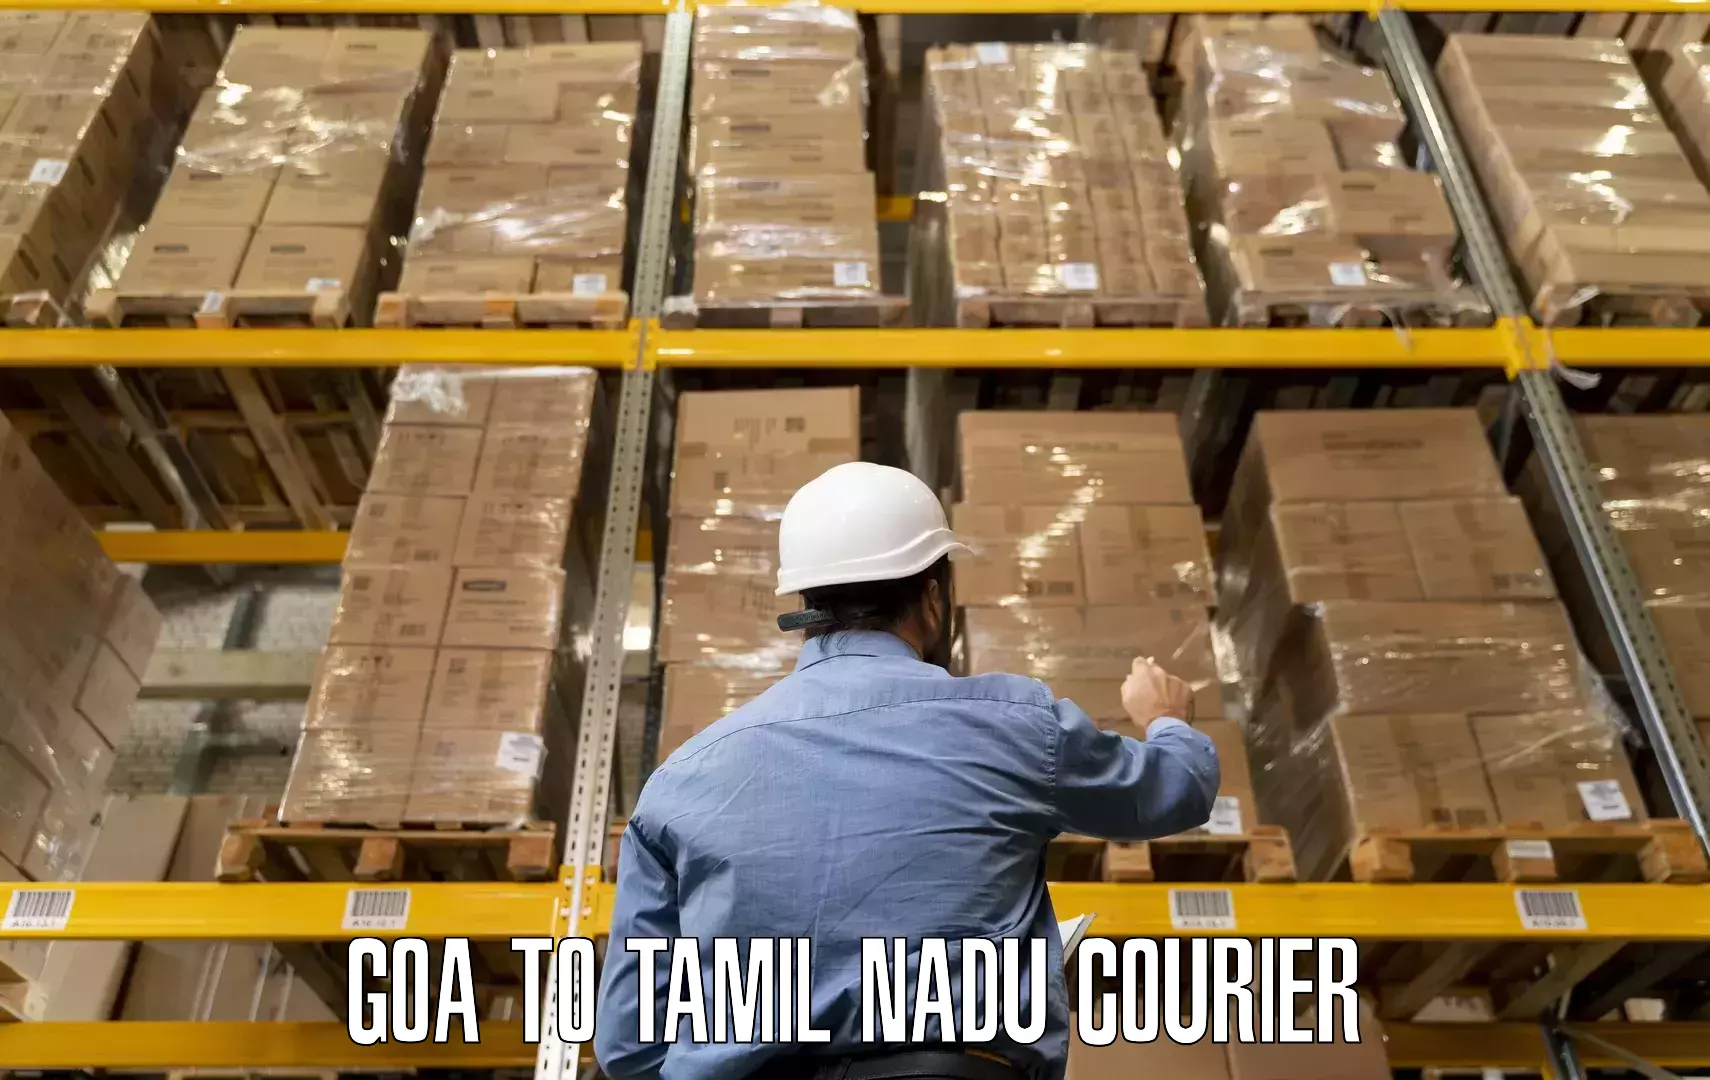 Quality moving company Goa to Peralam